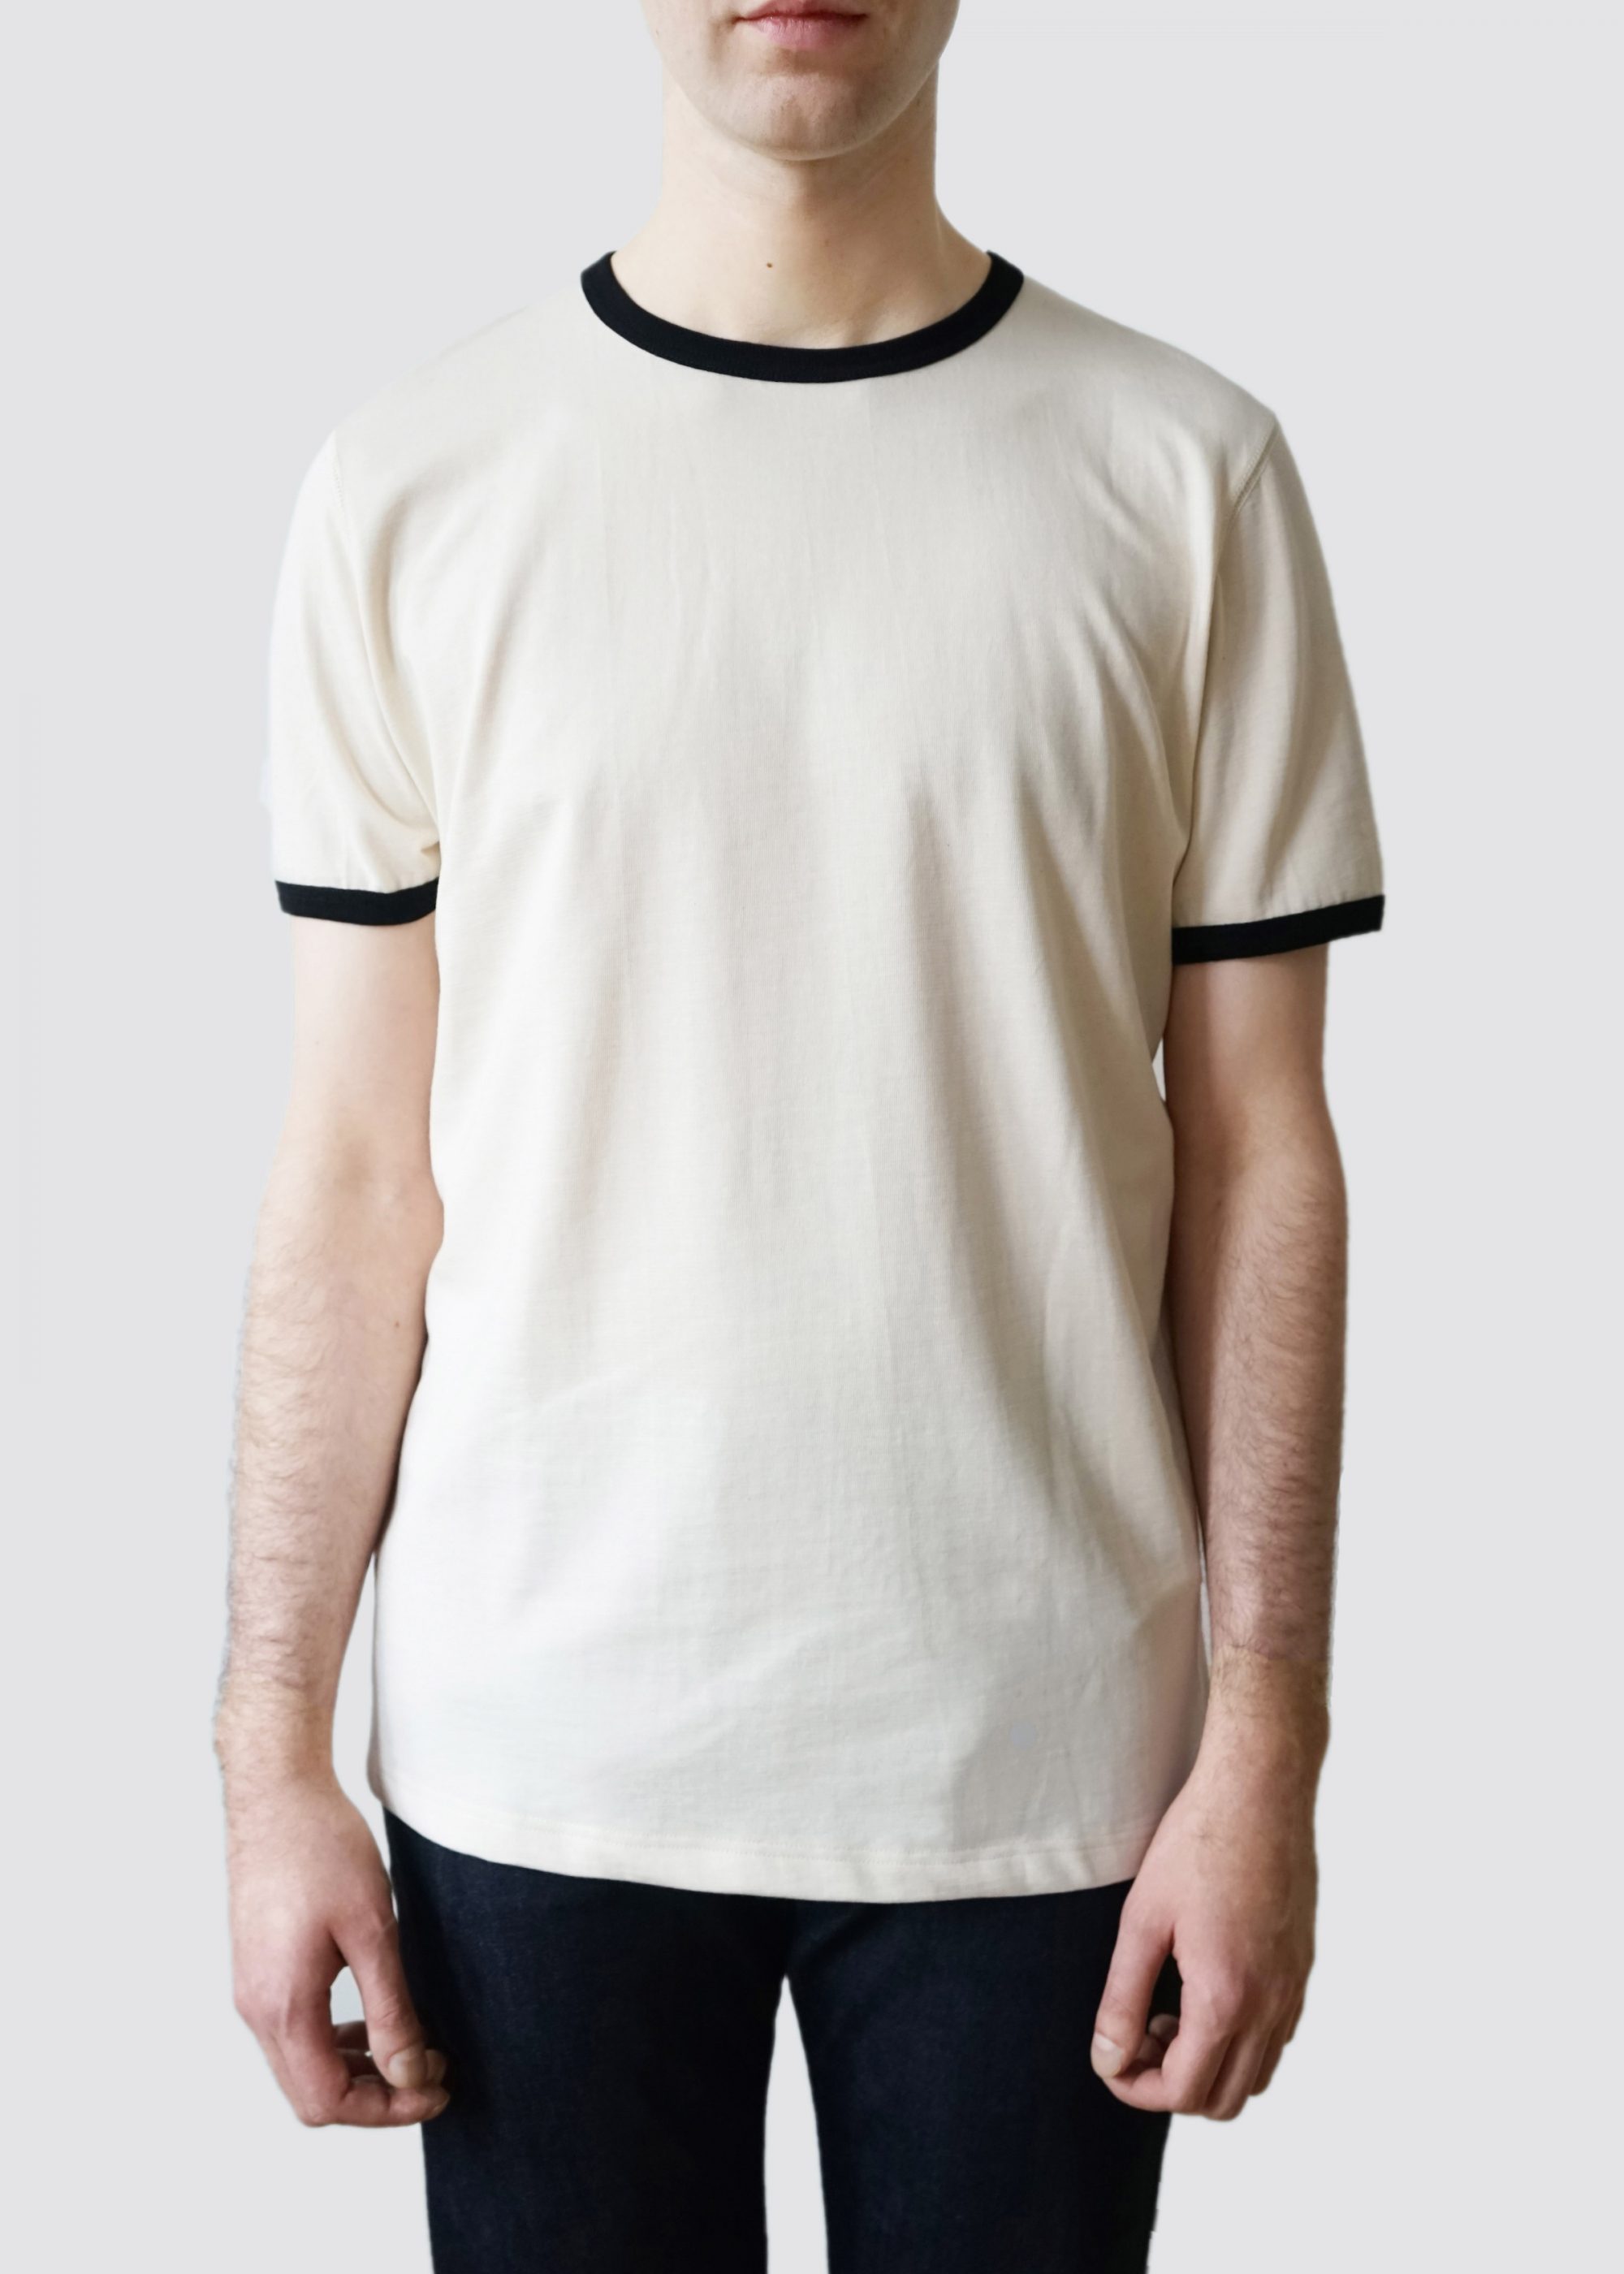 Product image for »Lennon« Ecru Black Ringer T-Shirt 100% Organic Cotton